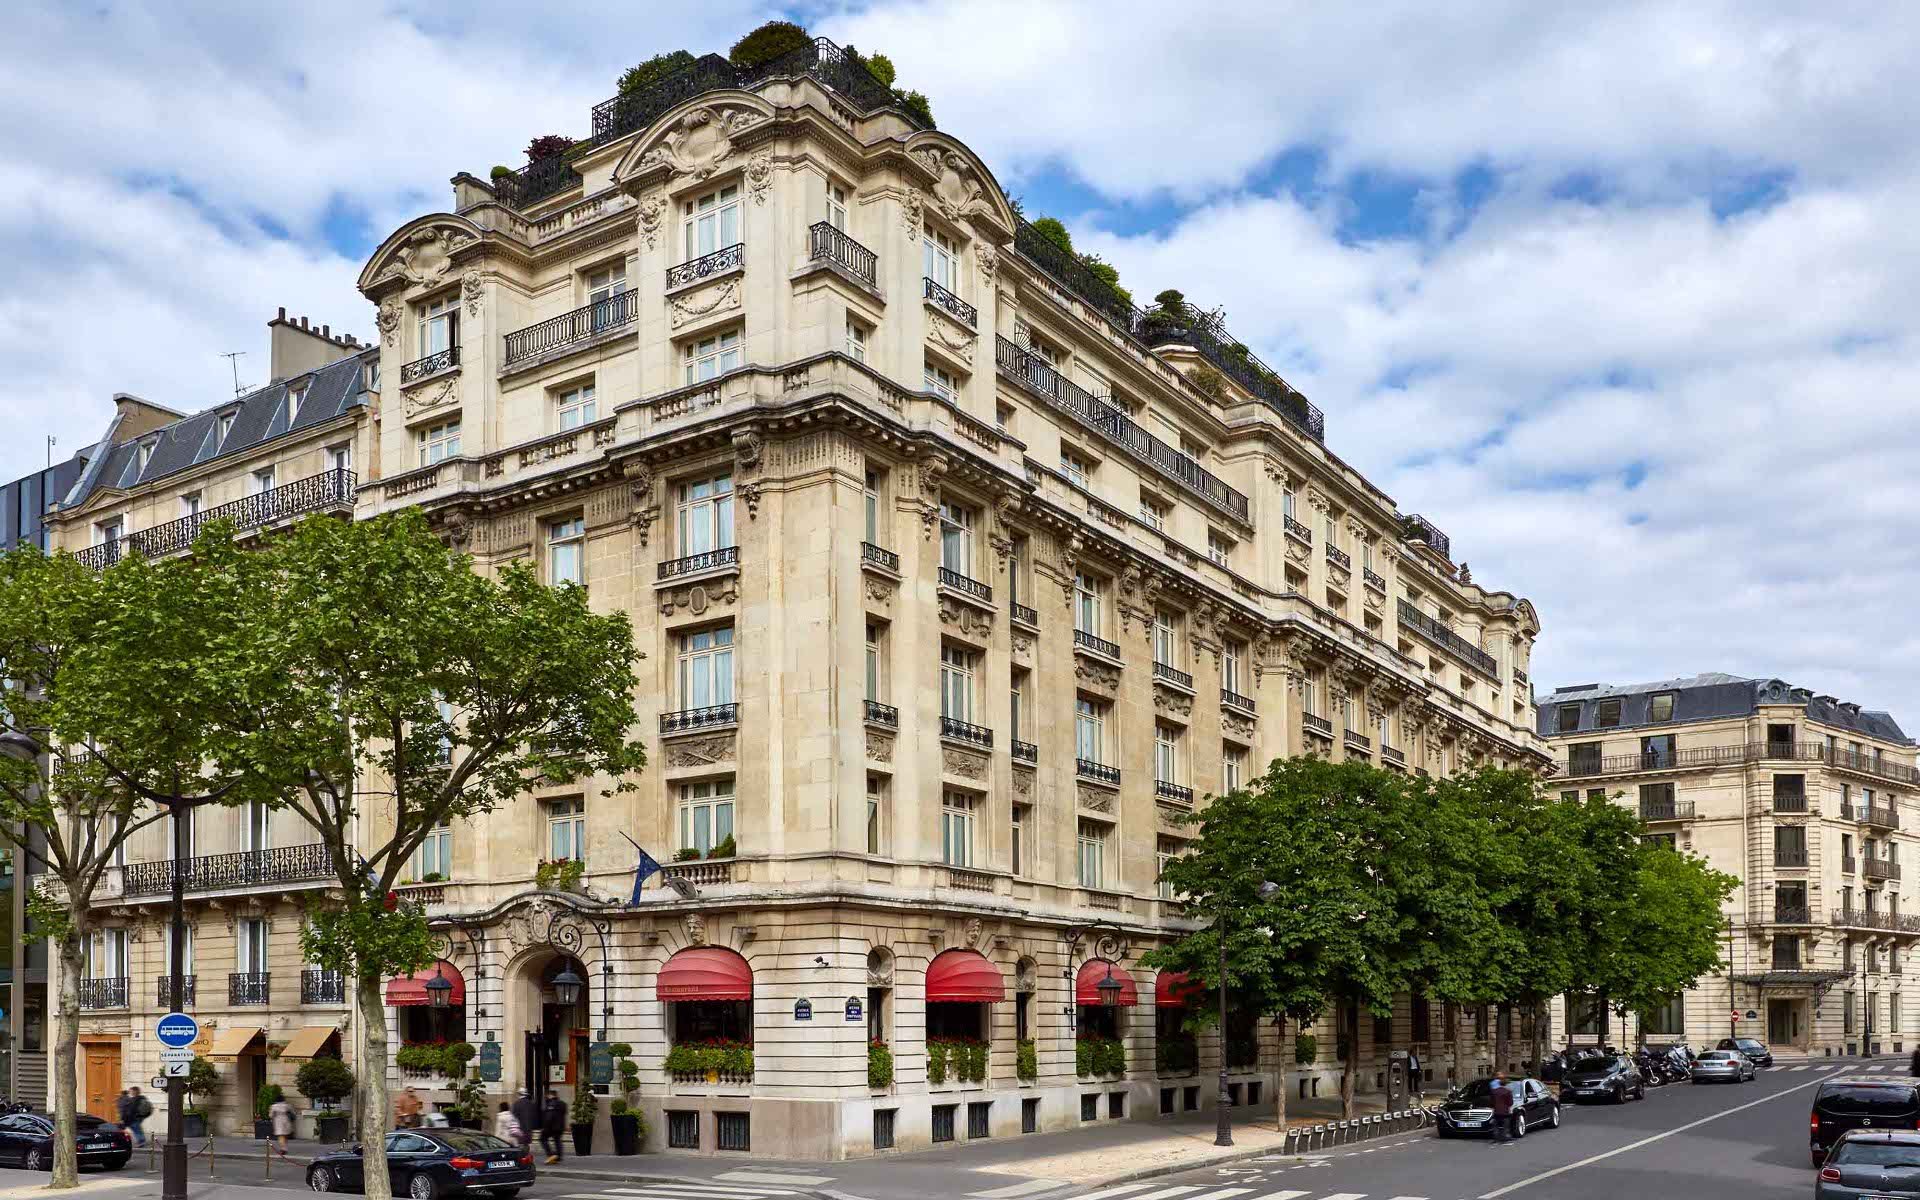 266/8-exterieur/Faade 1 - Hotel Raphael Paris.jpg